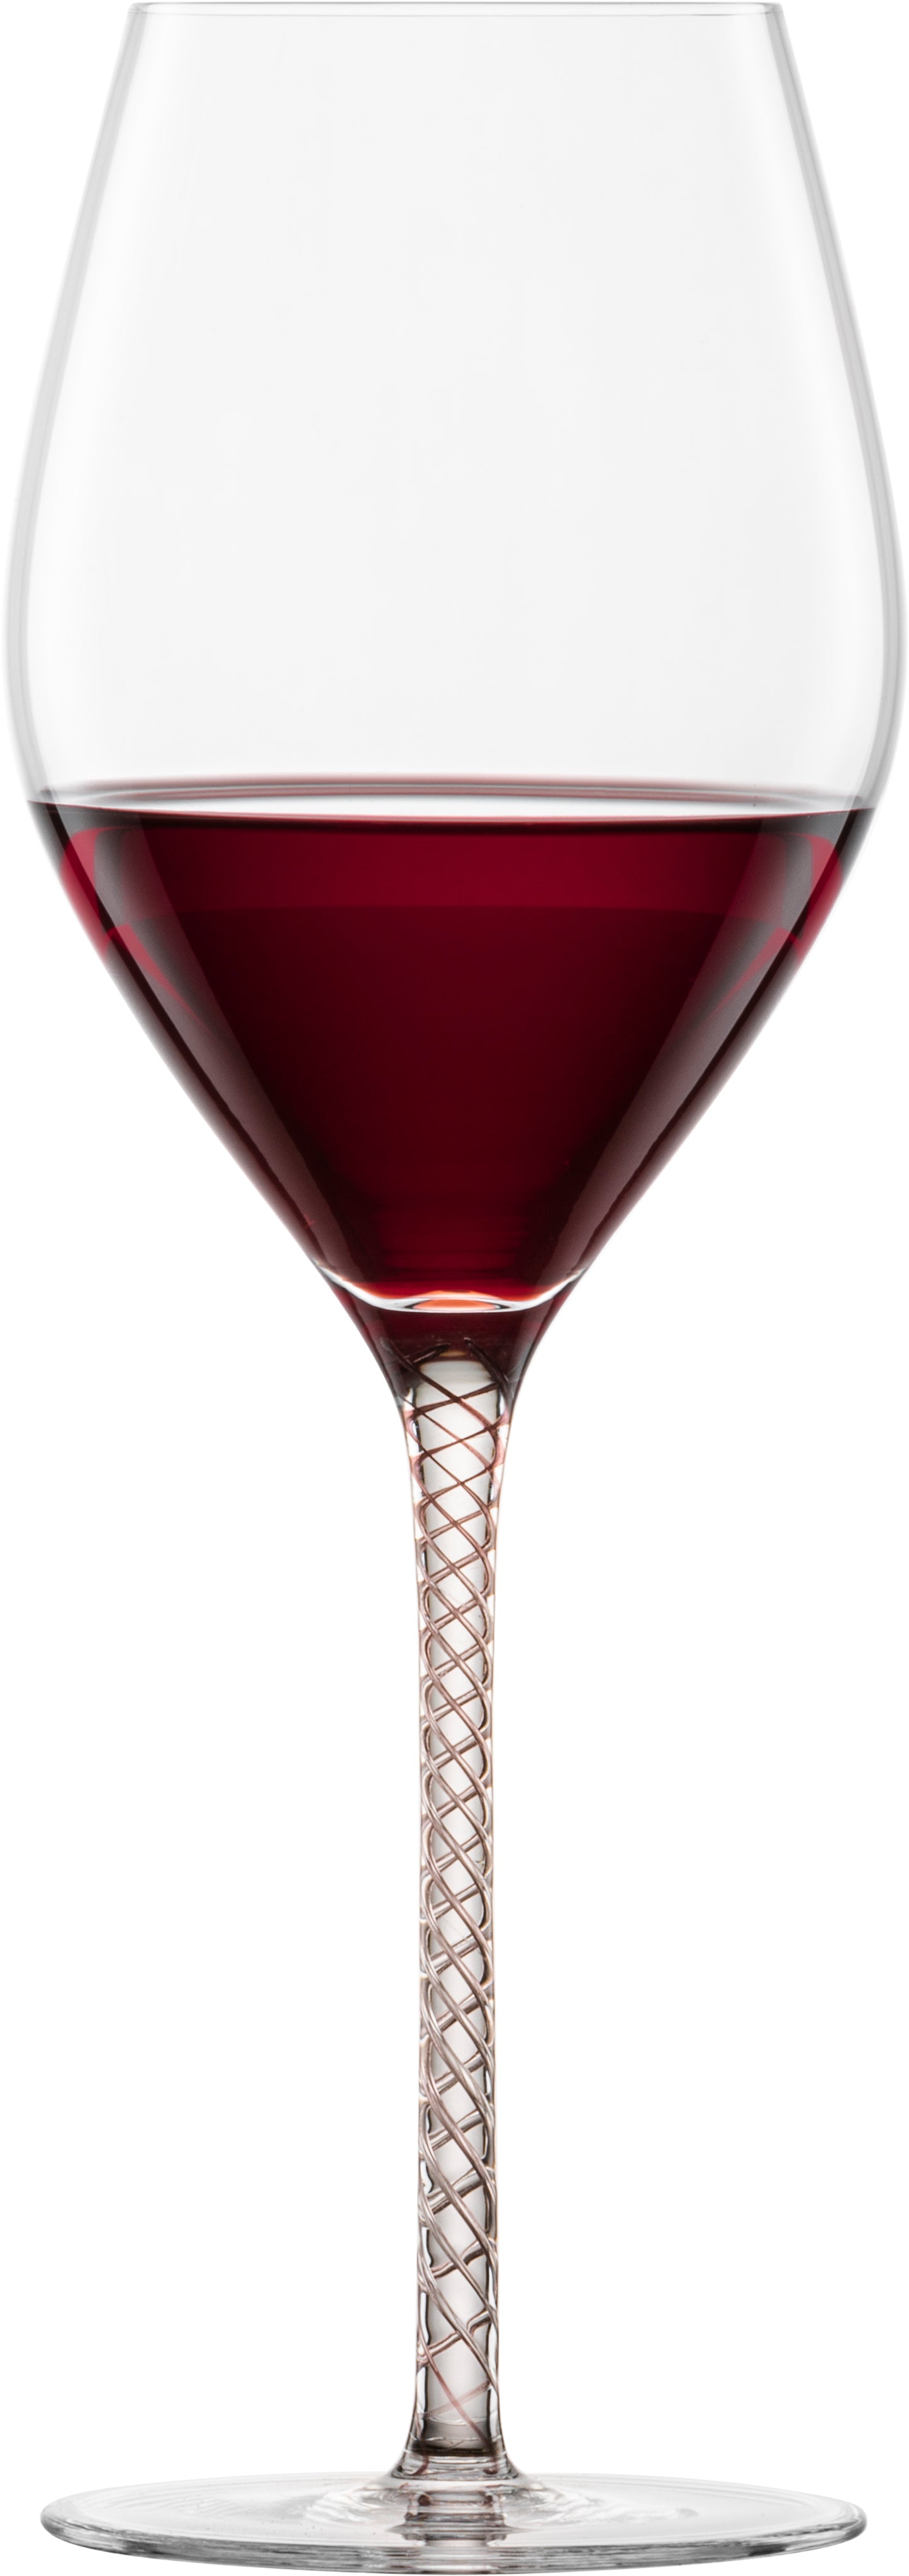 Spirit Bordeaux Red Wine Glass, Aubergine, Set of 2